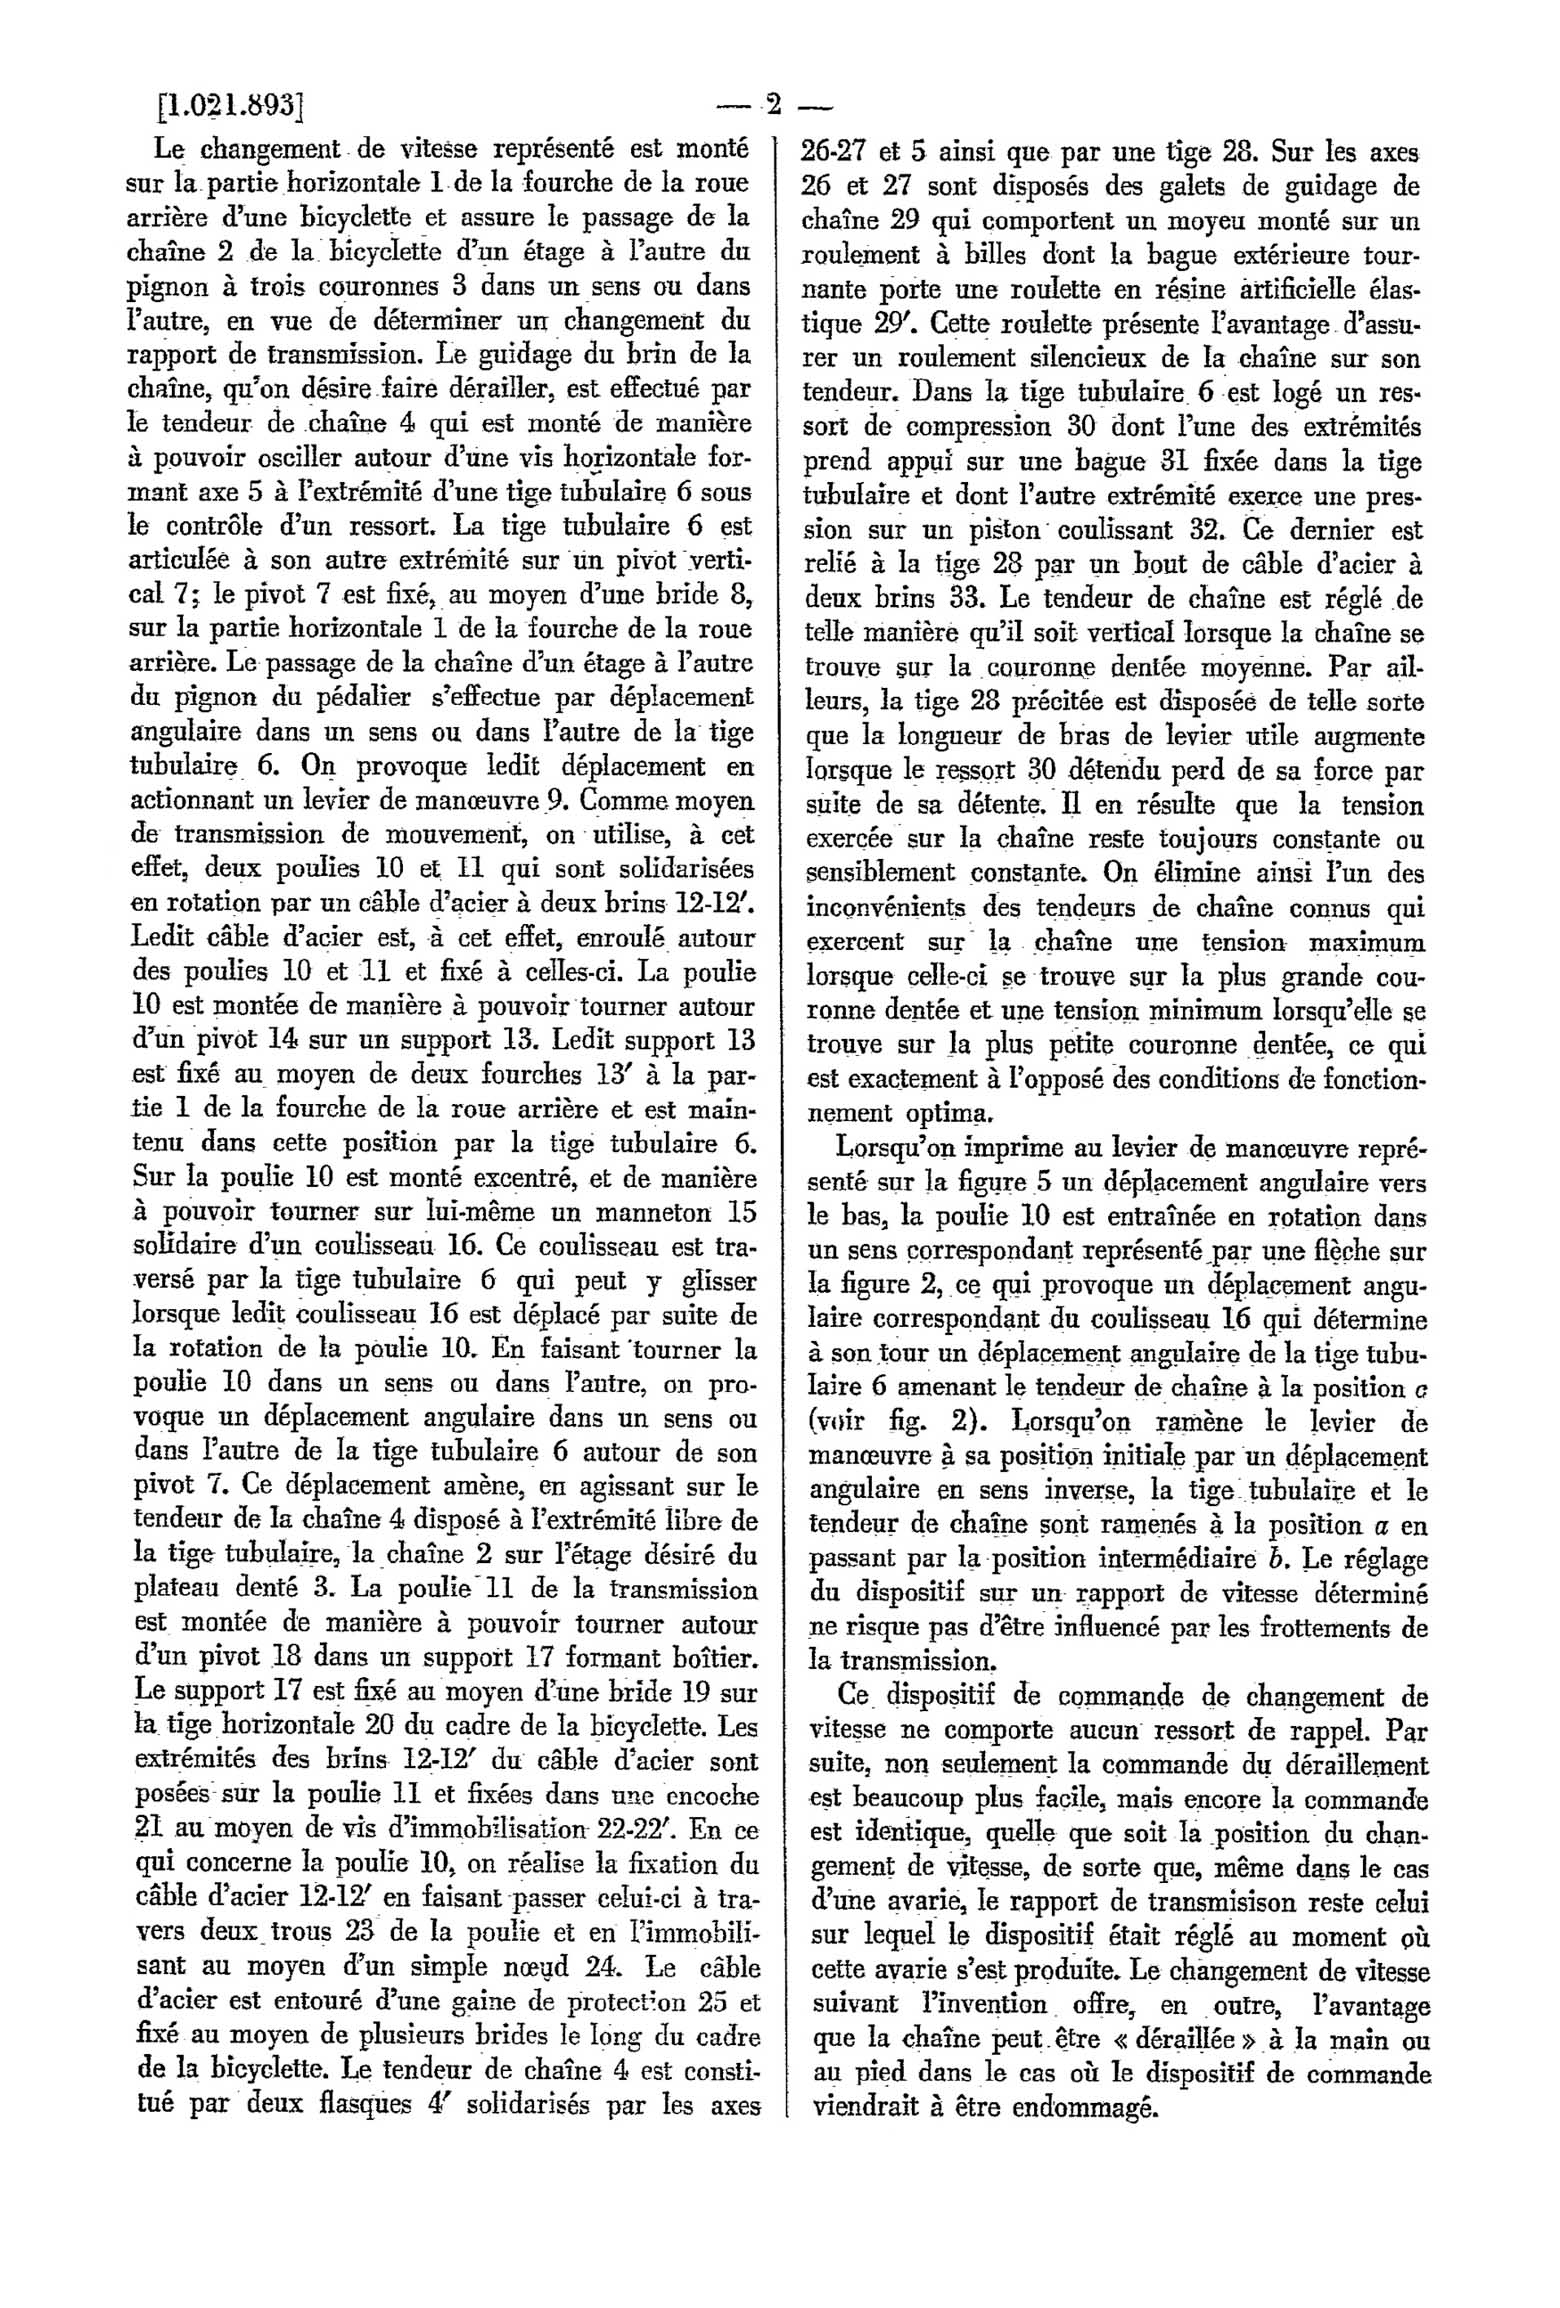 French Patent 1,021,893 - Vittoria scan 2 main image